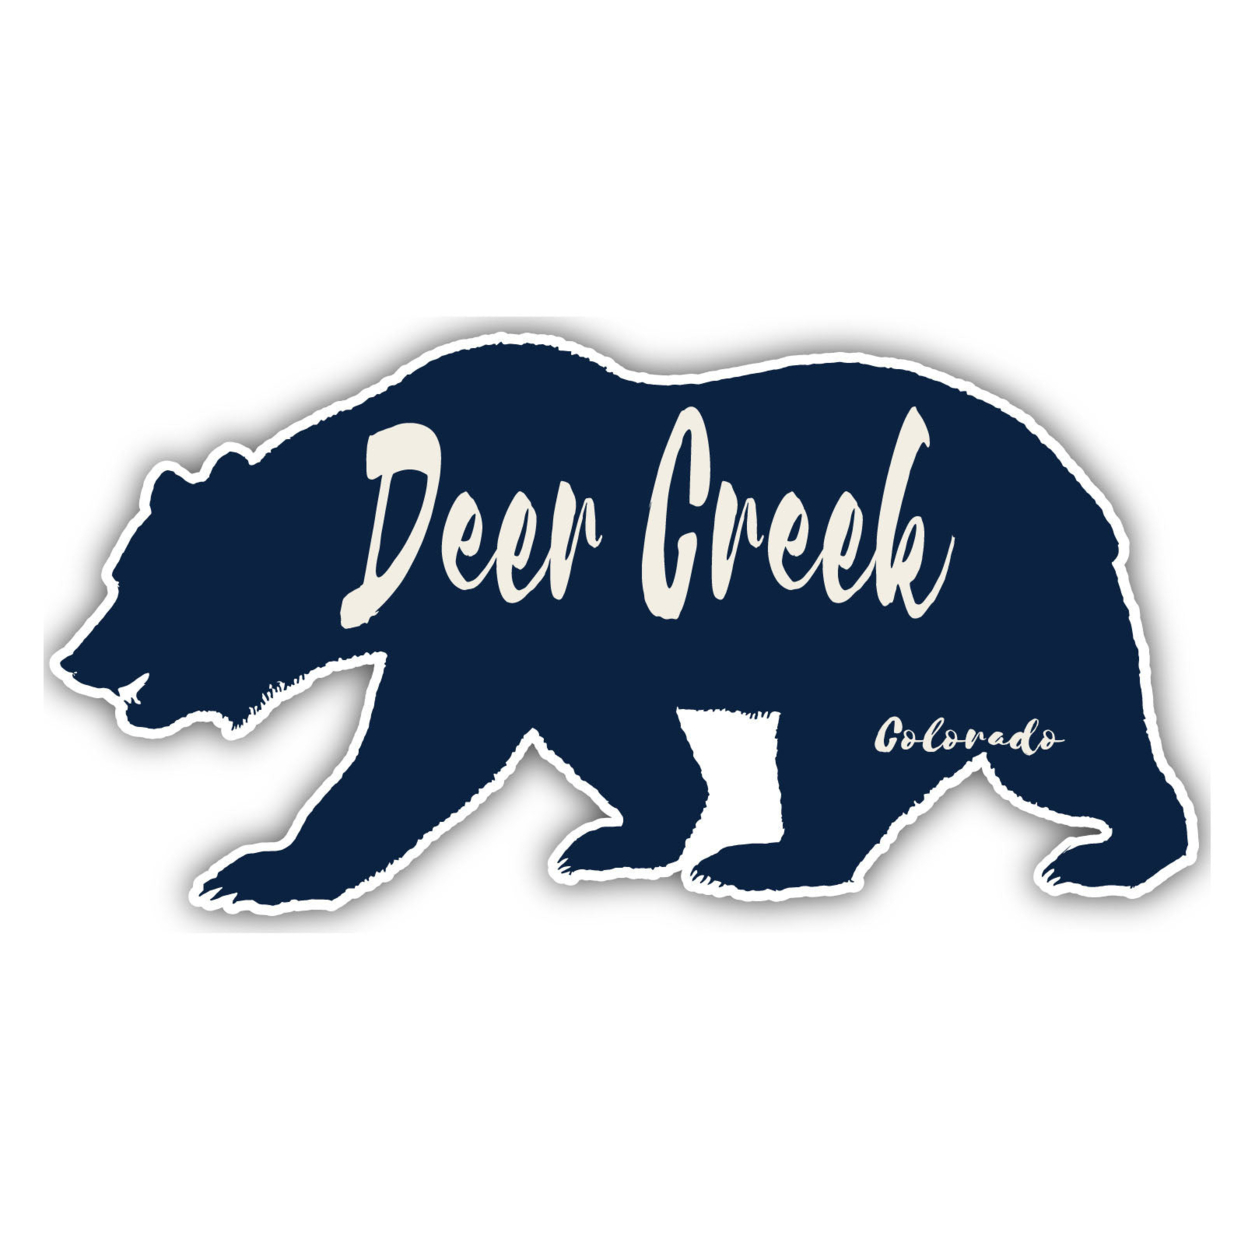 Deer Creek Colorado Souvenir Decorative Stickers (Choose Theme And Size) - 4-Pack, 12-Inch, Bear